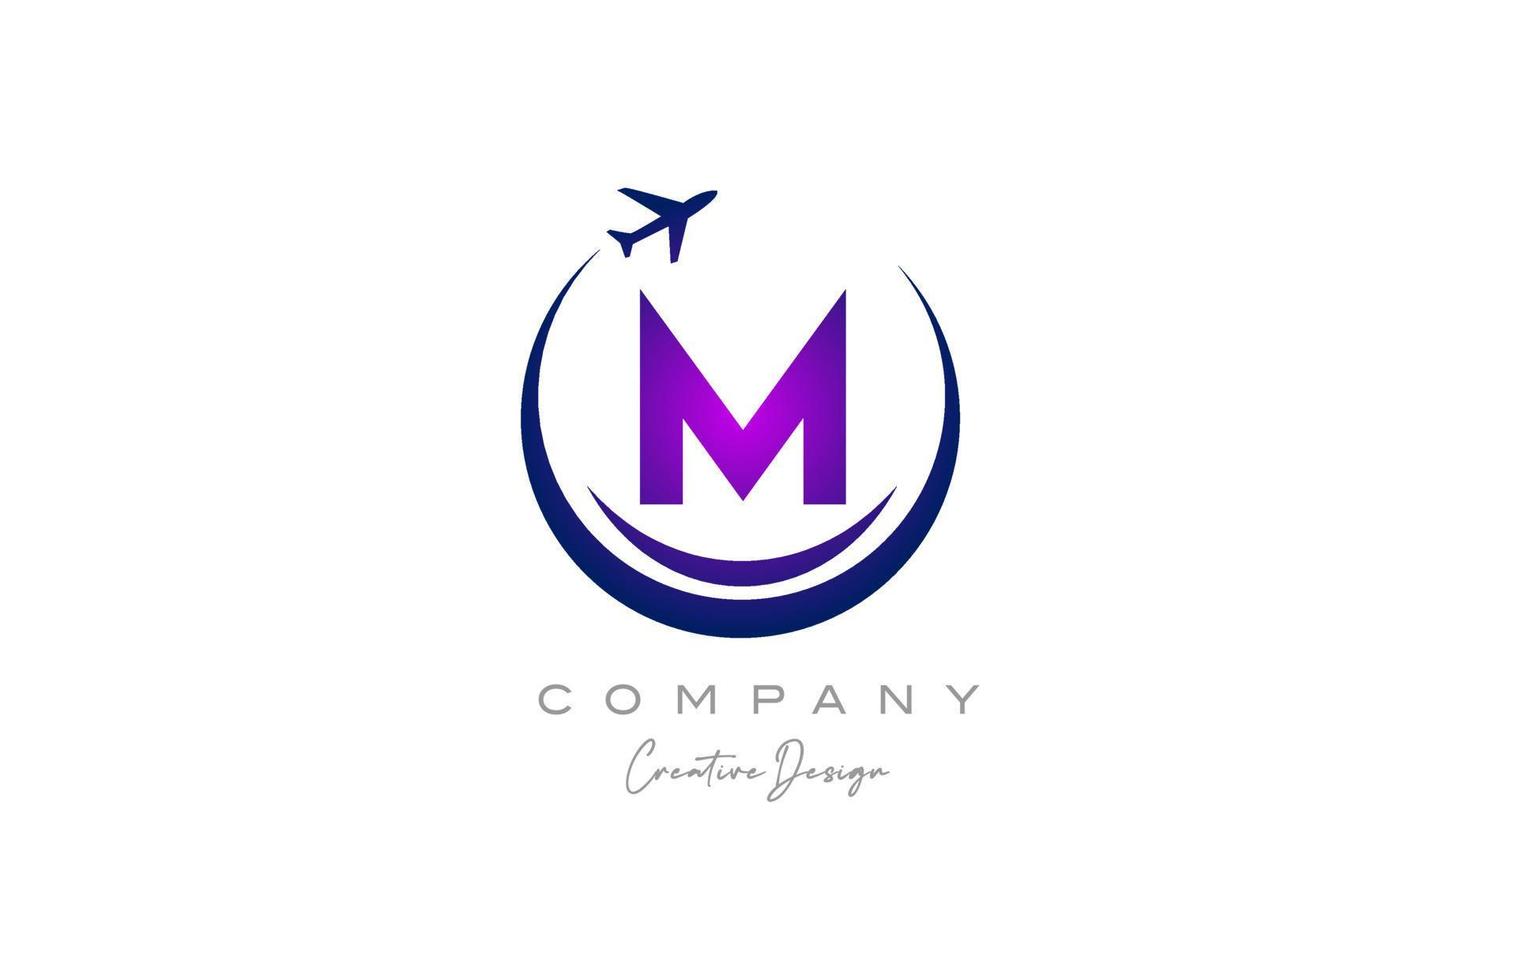 metro alfabeto letra logo con avión para un viaje o reserva agencia en púrpura. corporativo creativo modelo diseño para empresa y negocio vector